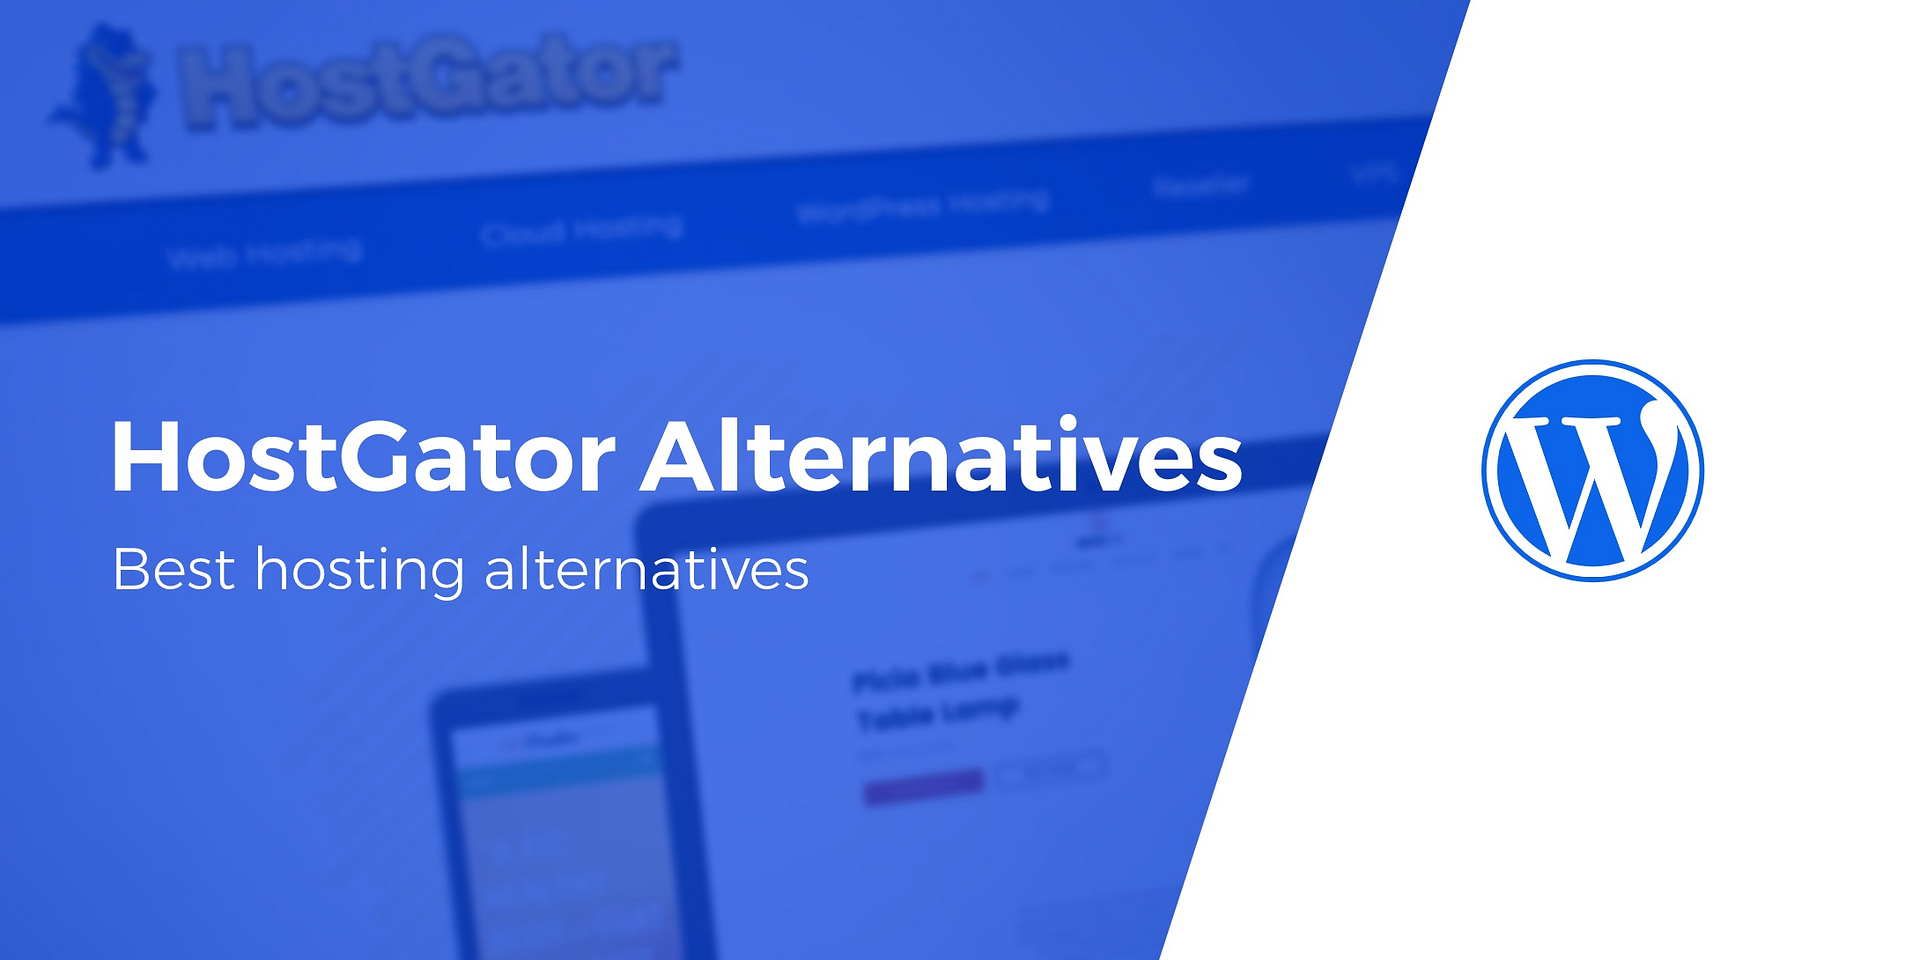 4 Best Hostgator Alternatives Based On Real Survey Data Images, Photos, Reviews